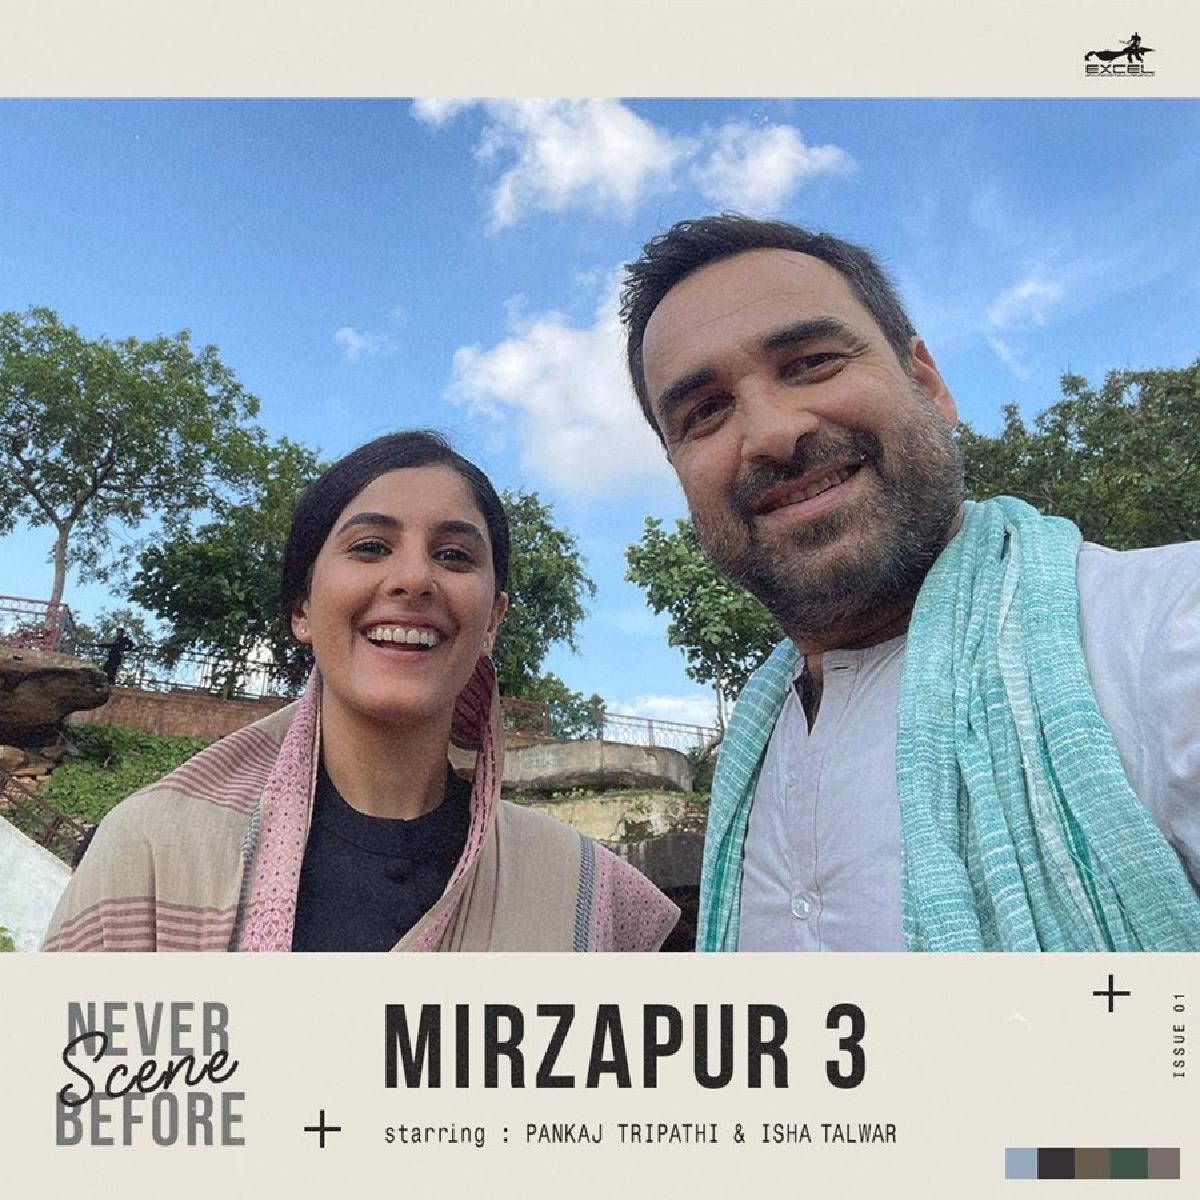 Check Out BTS From Mirzapur 3, Feat. Pankaj Tripathi And Isha Talwar